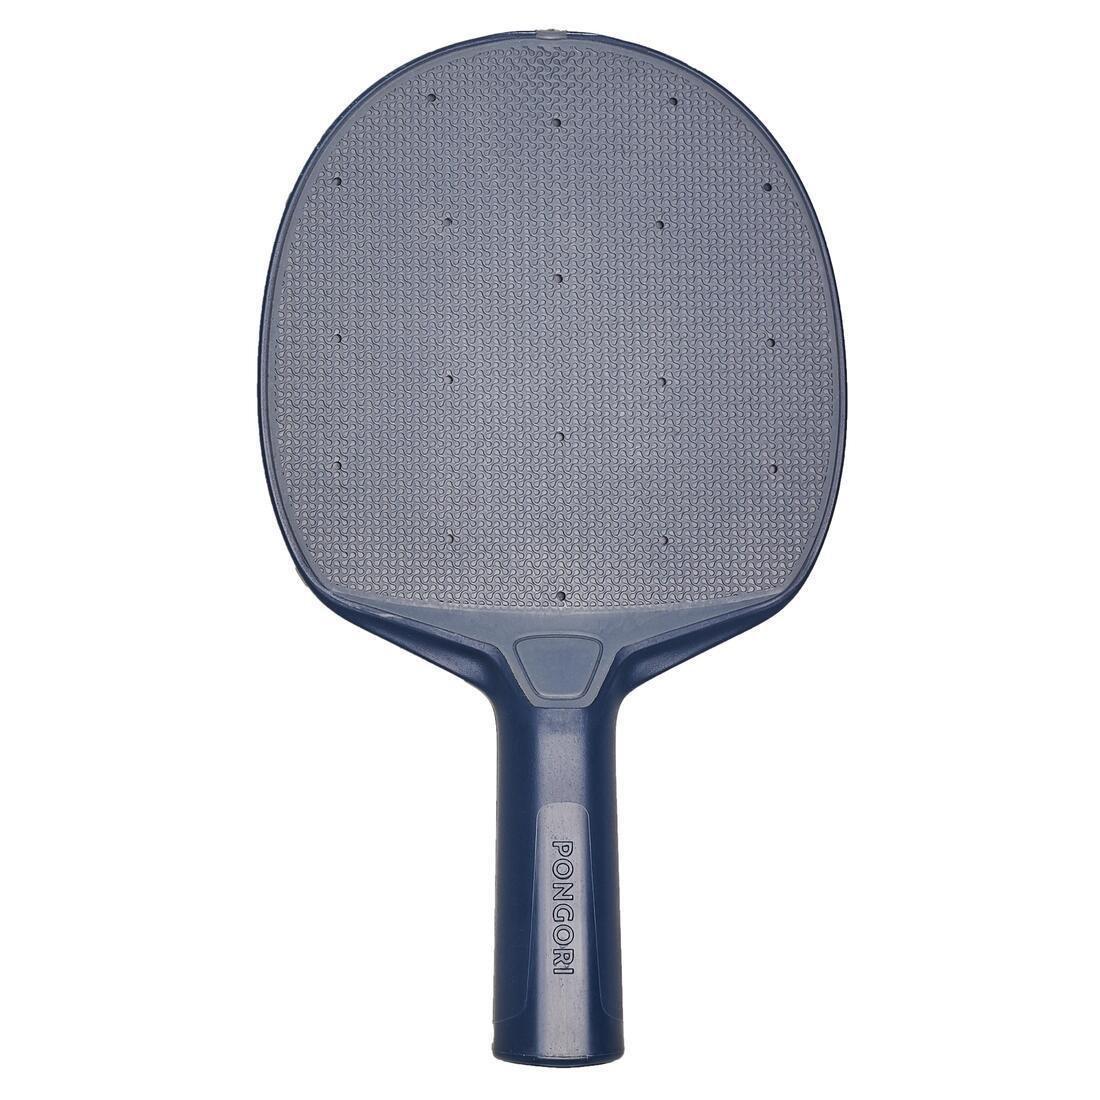 PONGORI - Table Tennis Durable Bat, Grey